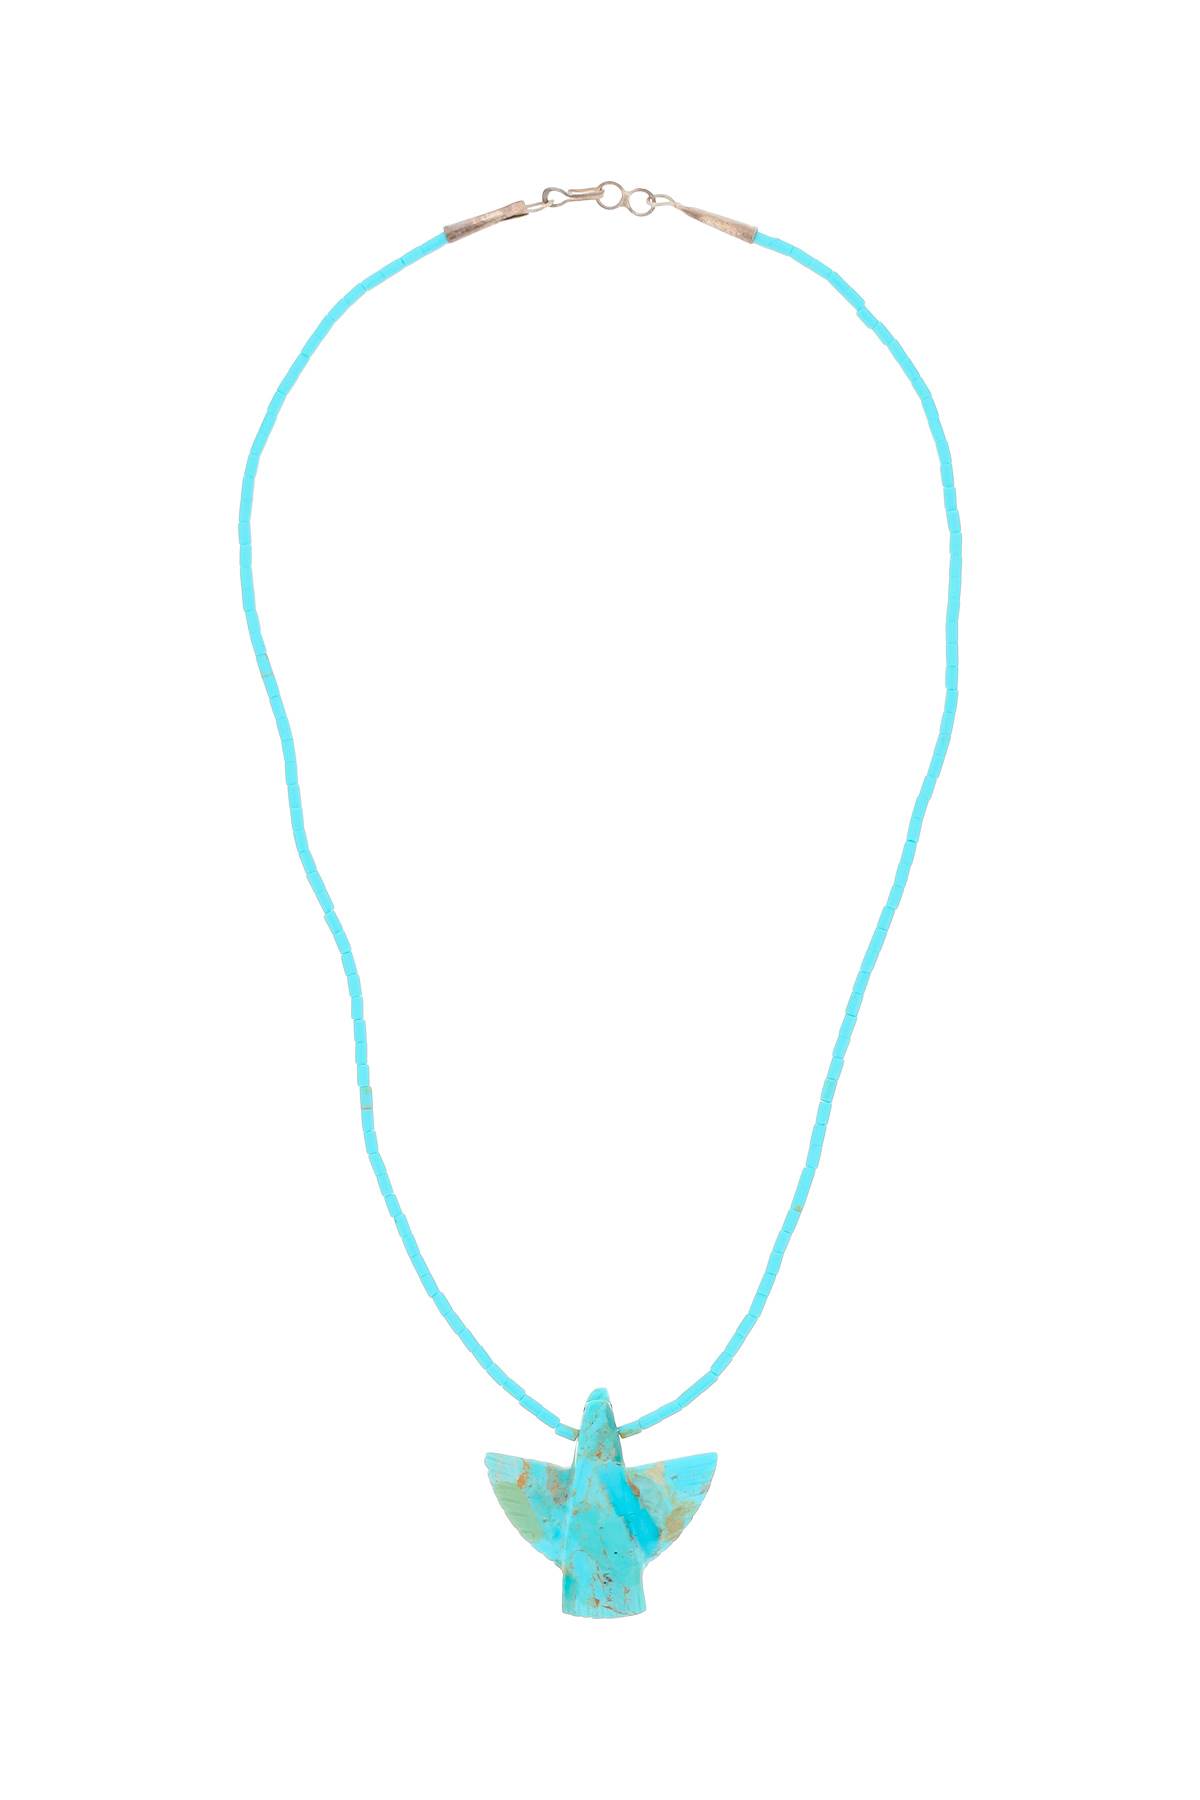 Jessie Western Turquoise Eagle Chocker Necklace